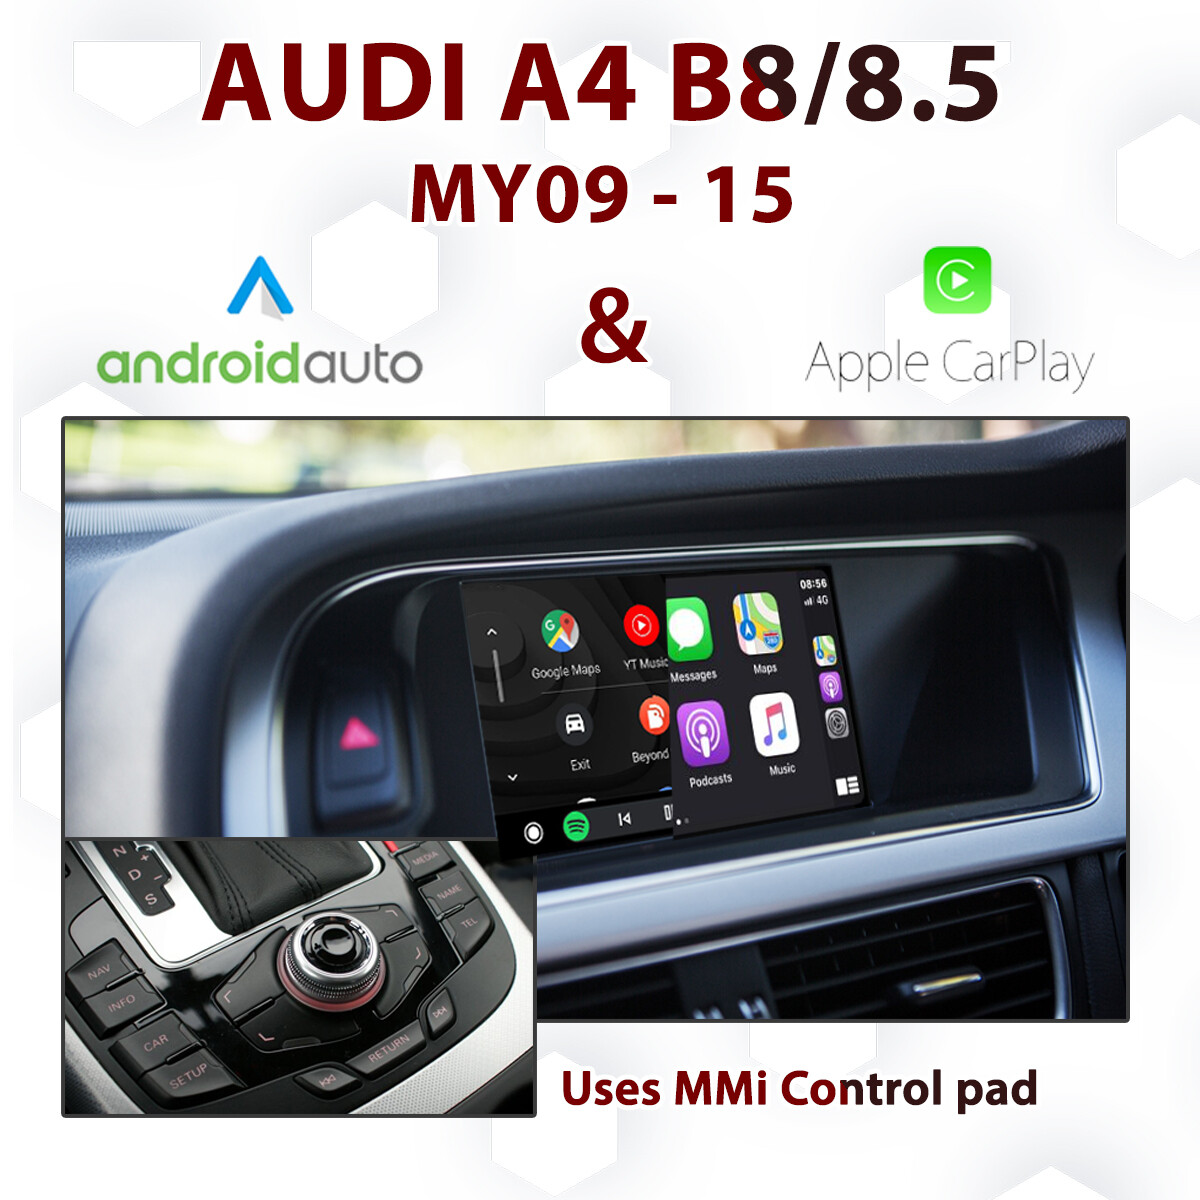 [DIAL] Audi A4 3G MMI HIGH / PLUS - Apple CarPlay & Android Auto